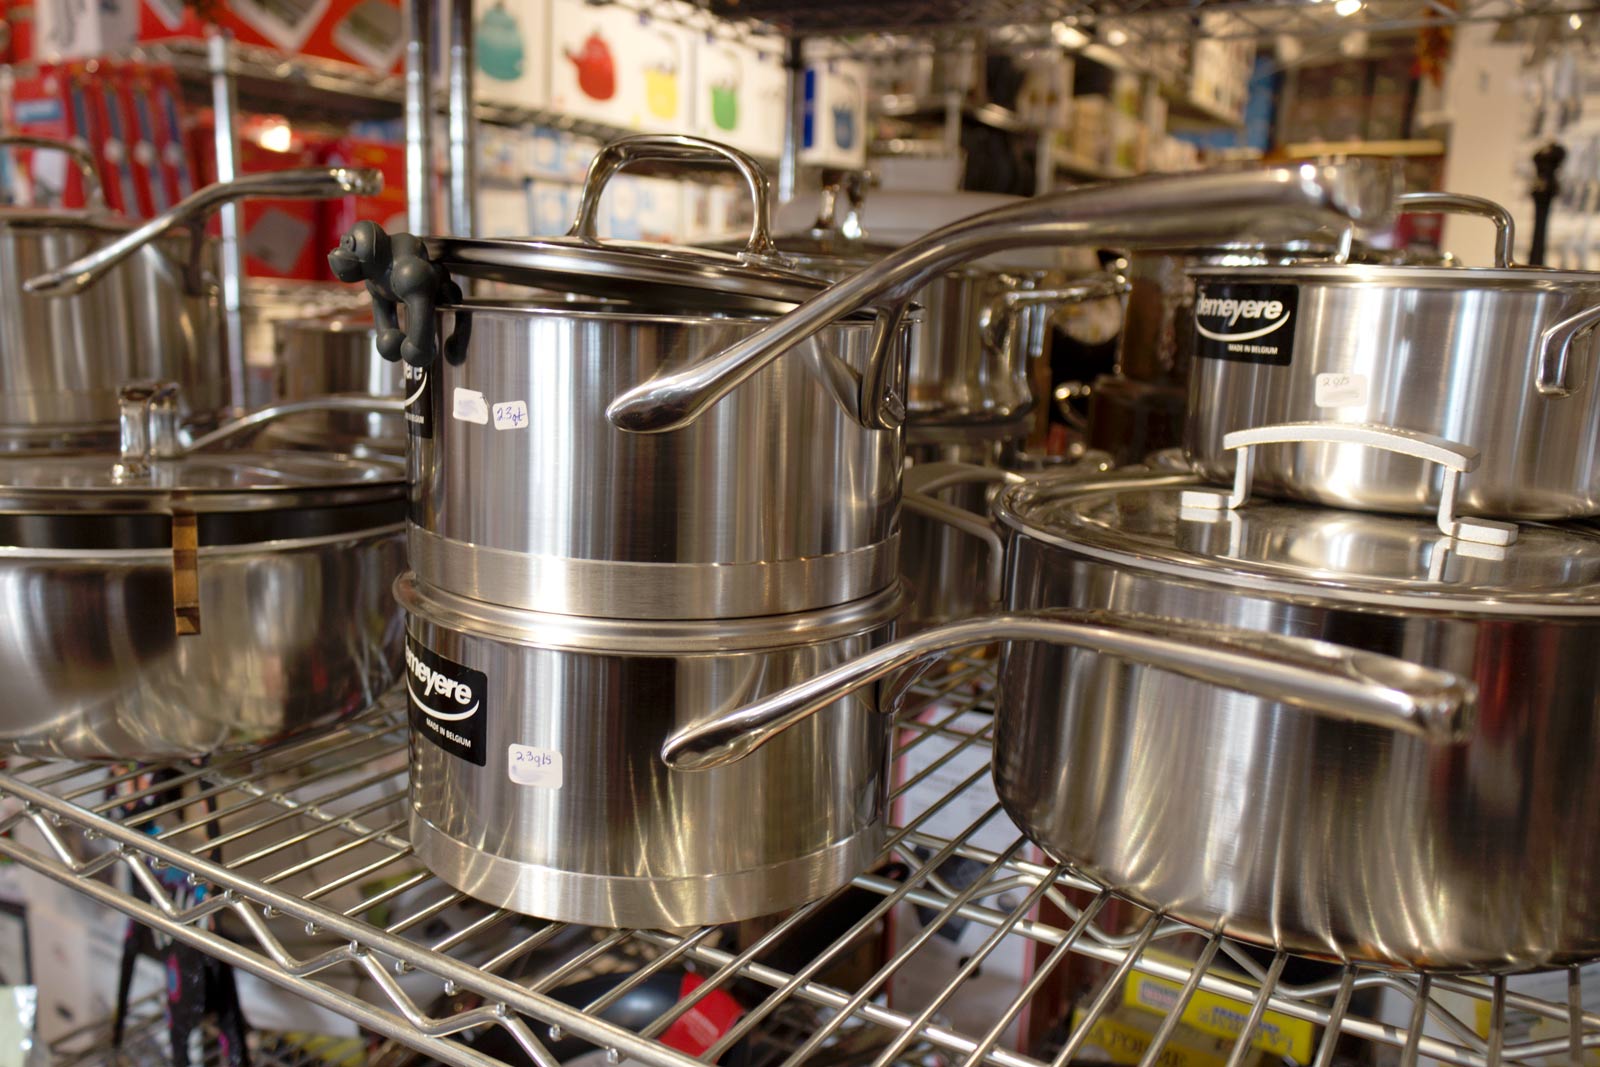 HOME HERO Stainless Steel Kitchen Utensil Set - 29 Cooking Utensils -  Nonstick Kitchen Utensils Cookware Set with Spatula - Best Kitchen Gadgets  Kitchen Tool Se…